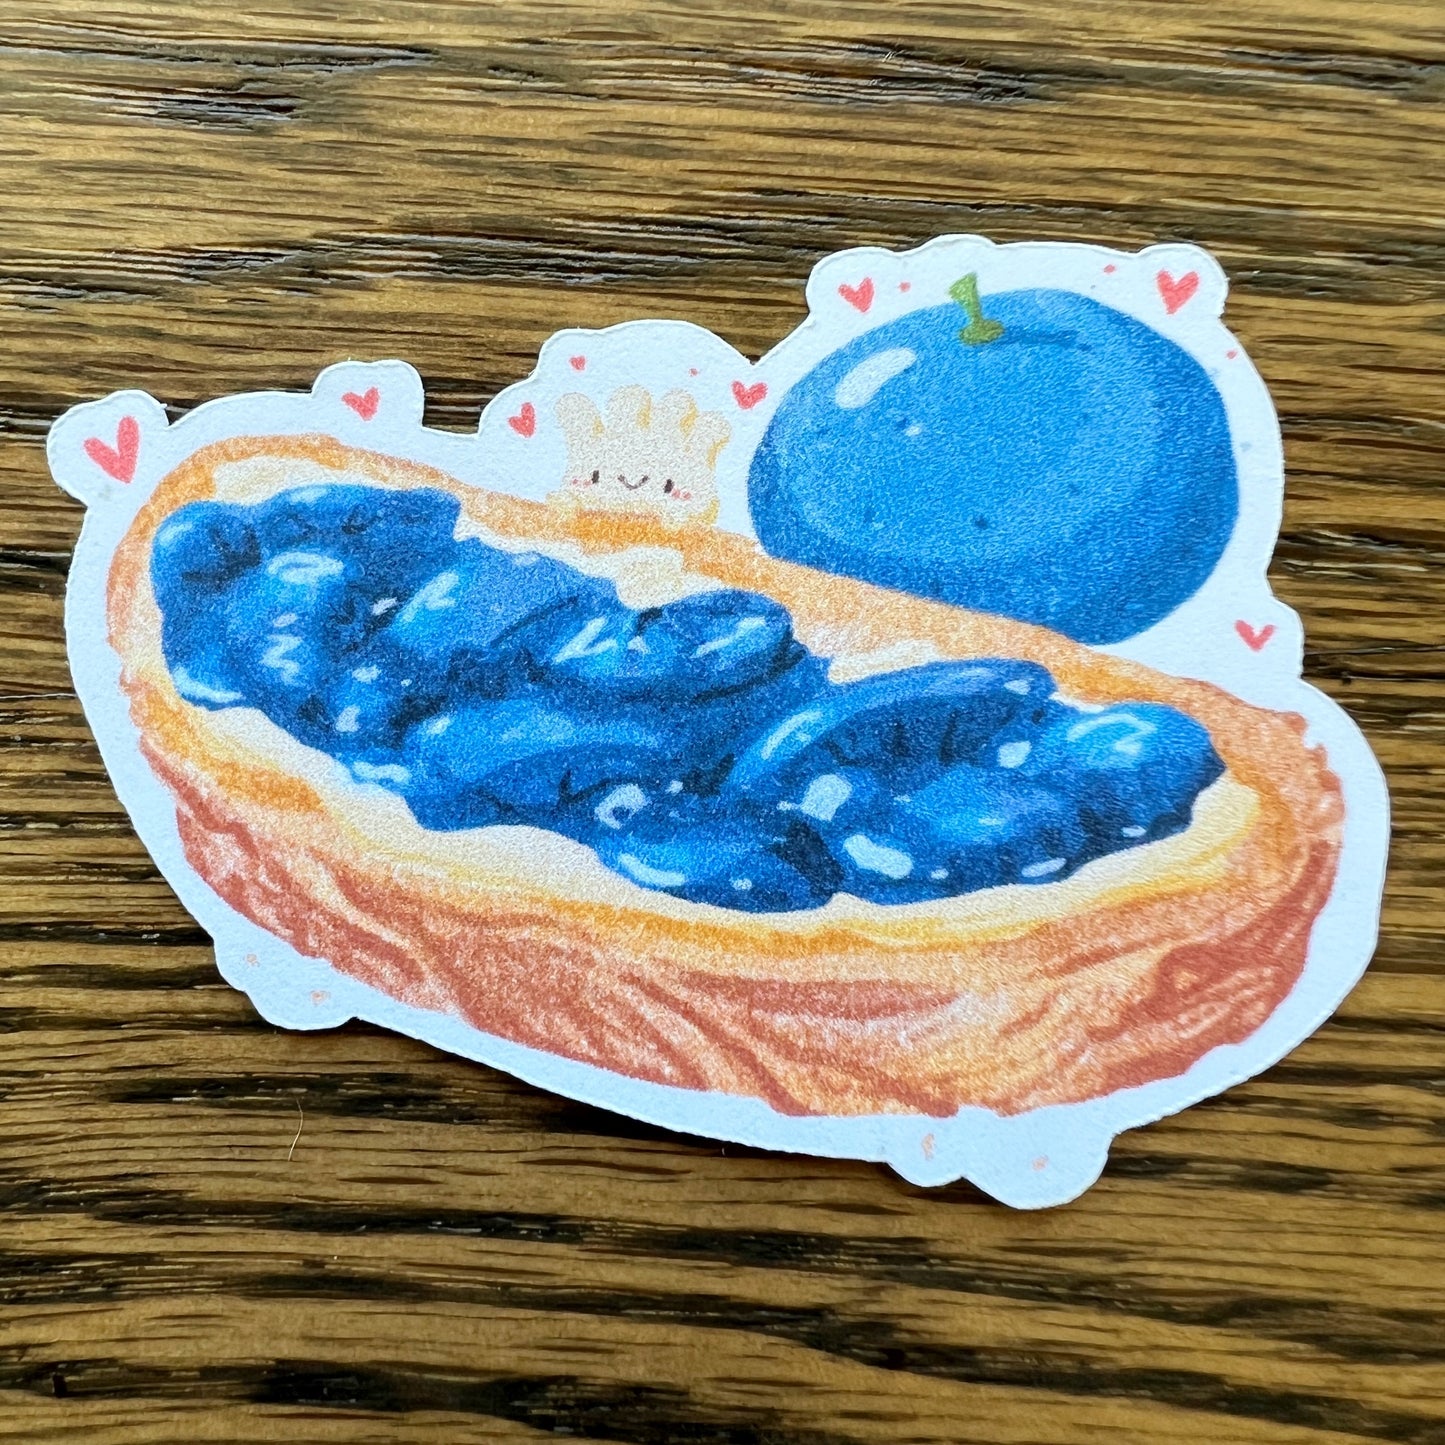 PKMN Anime Oran Berry Blueberry Toast Stickers - Die Cut